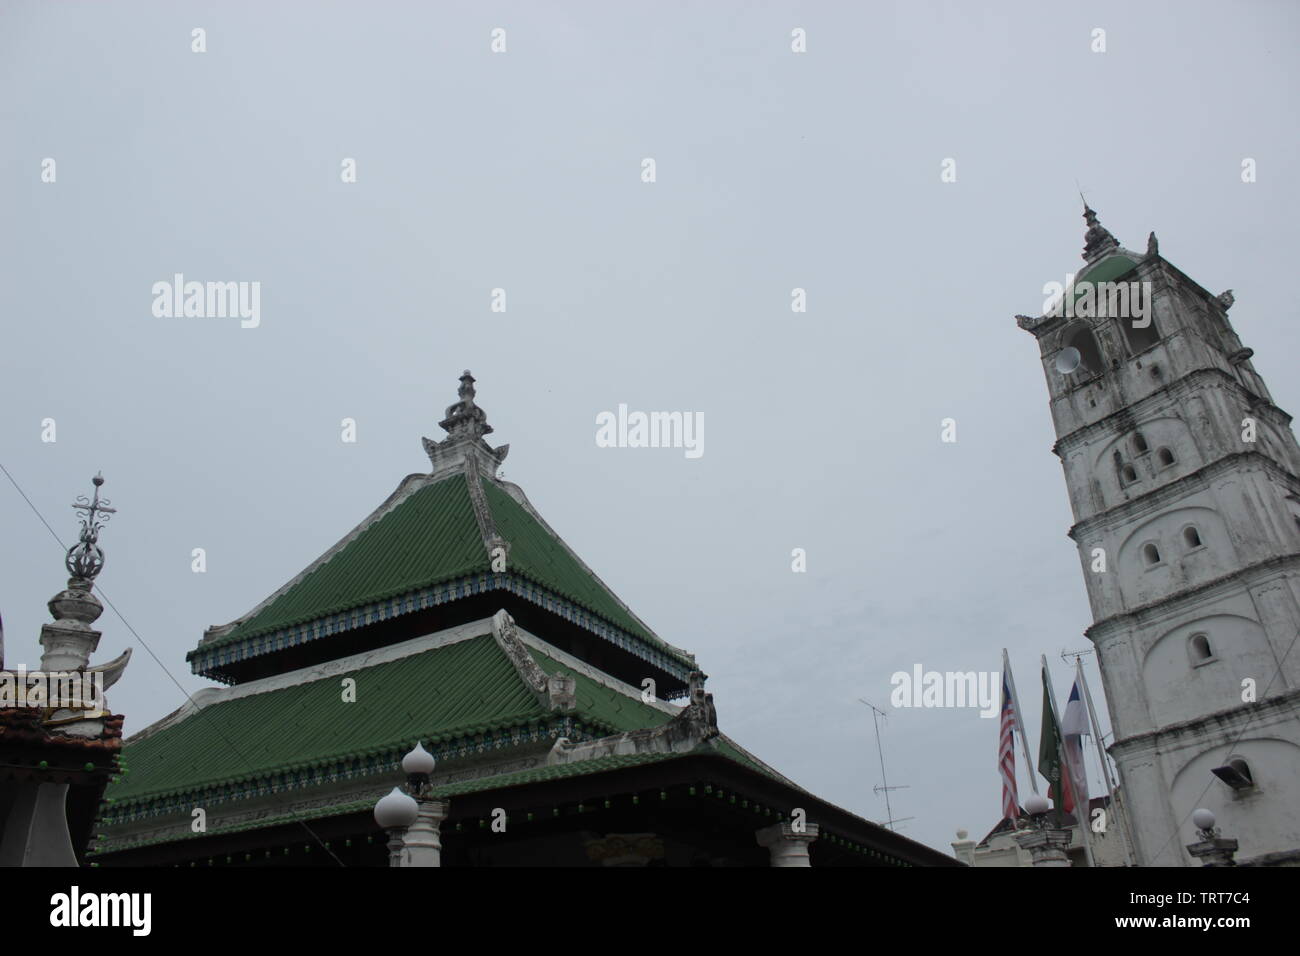 Kampung Kling Mosque, Malacca, Malaysia Stock Photo